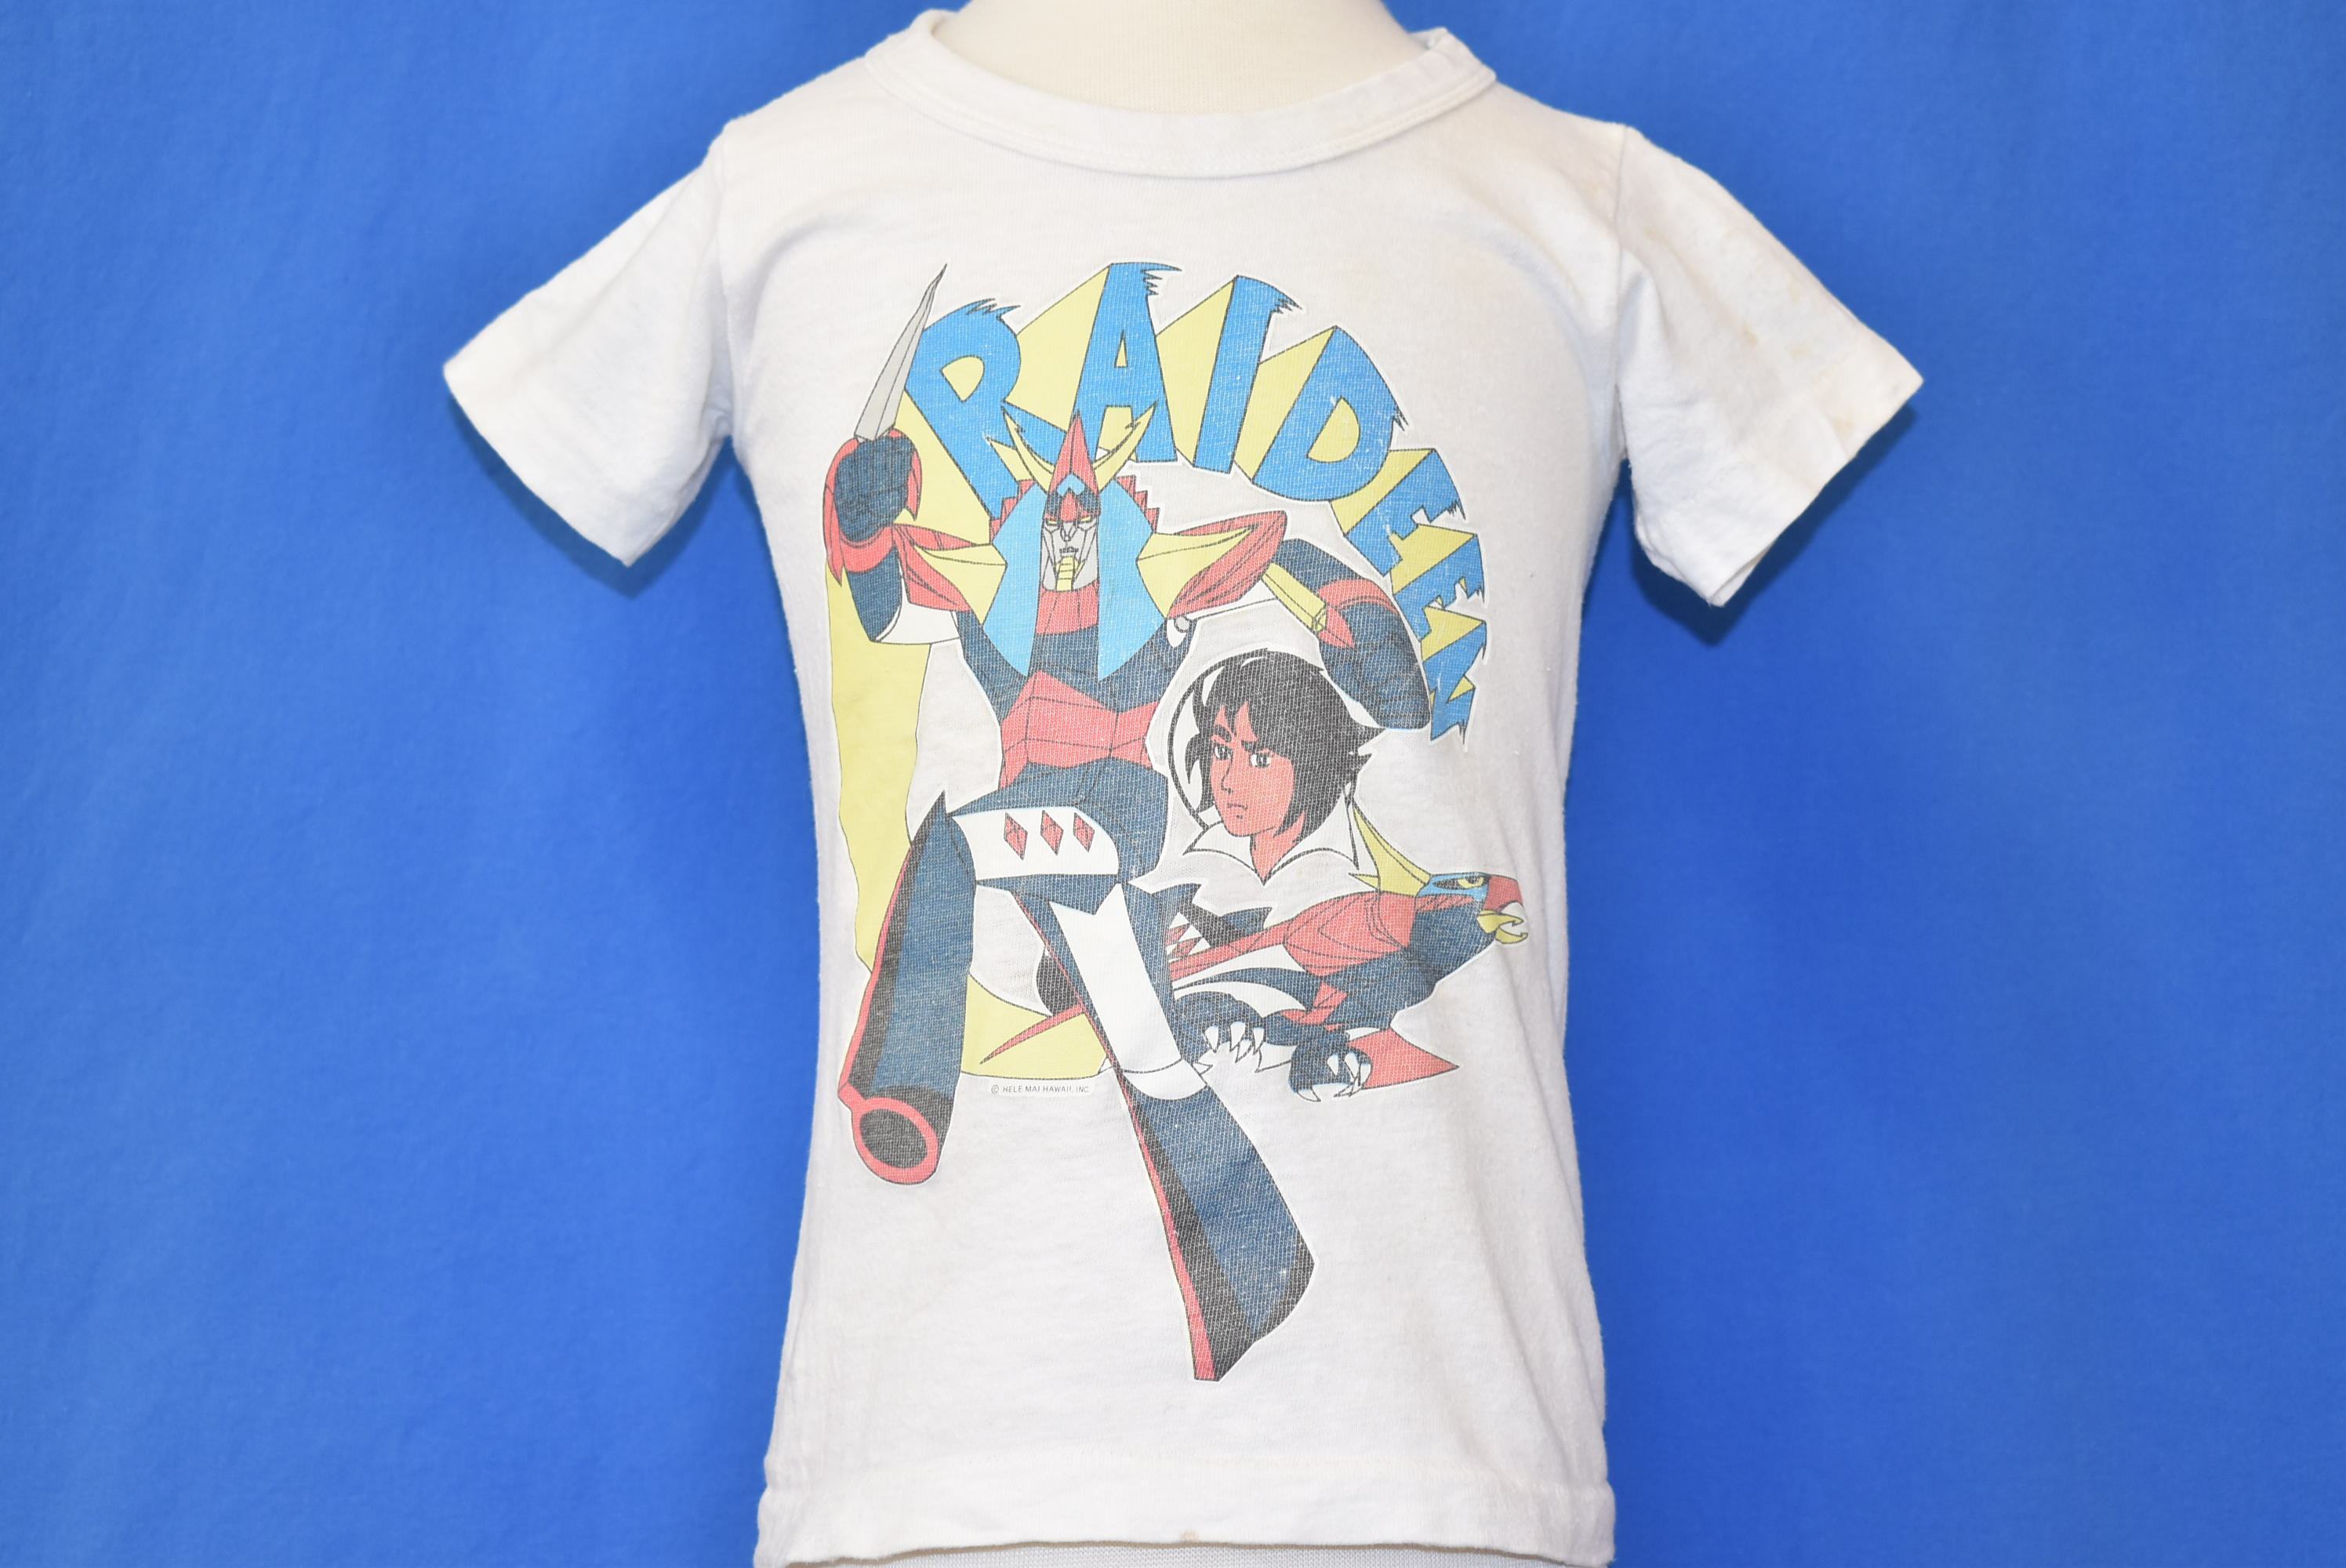 Hatsune Miku Japanese Anime Manga Shirt Cospa Mens Fashion Tops  Sets  Tshirts  Polo Shirts on Carousell